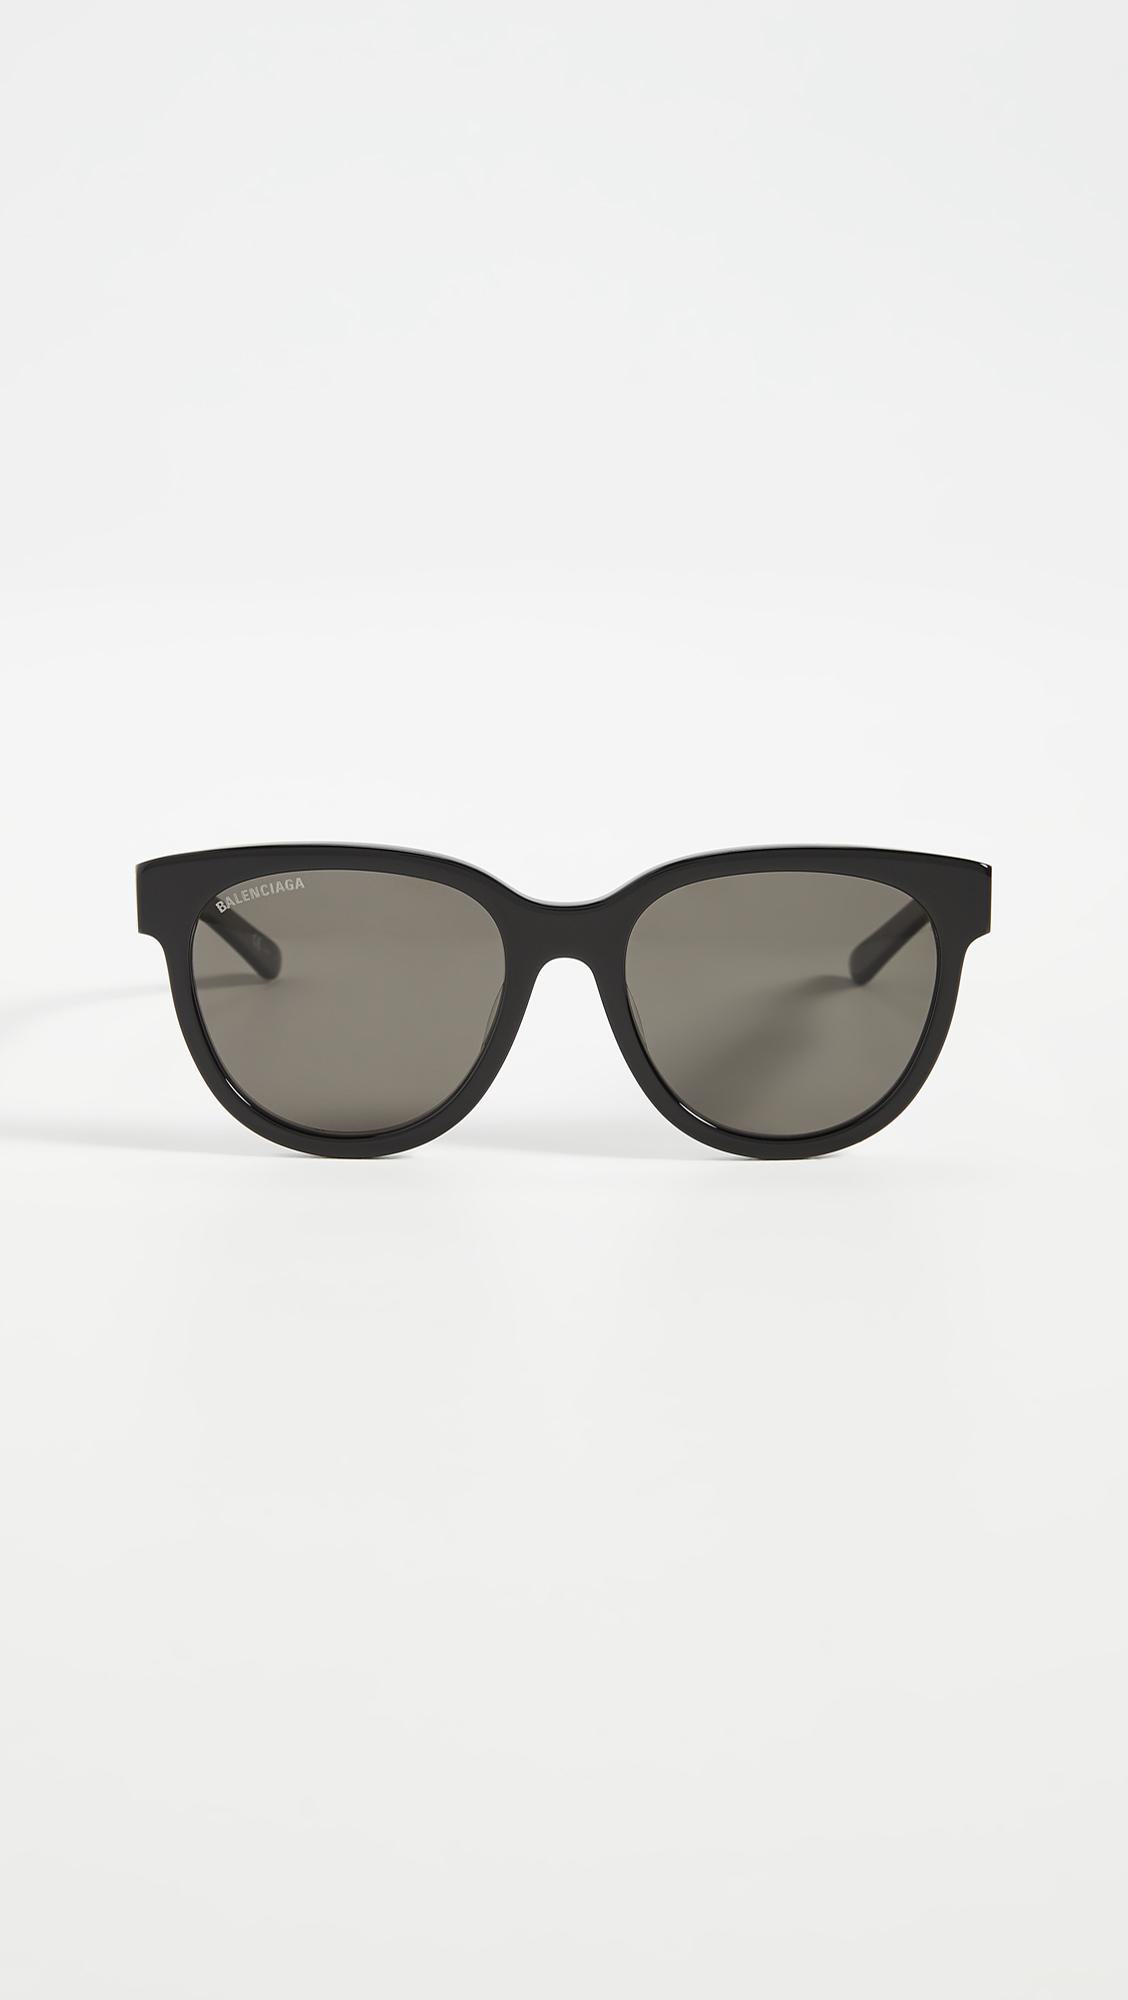 Balenciaga Block Cateye Acetate Sunglasses in Black/Black/Grey (Black) |  Lyst